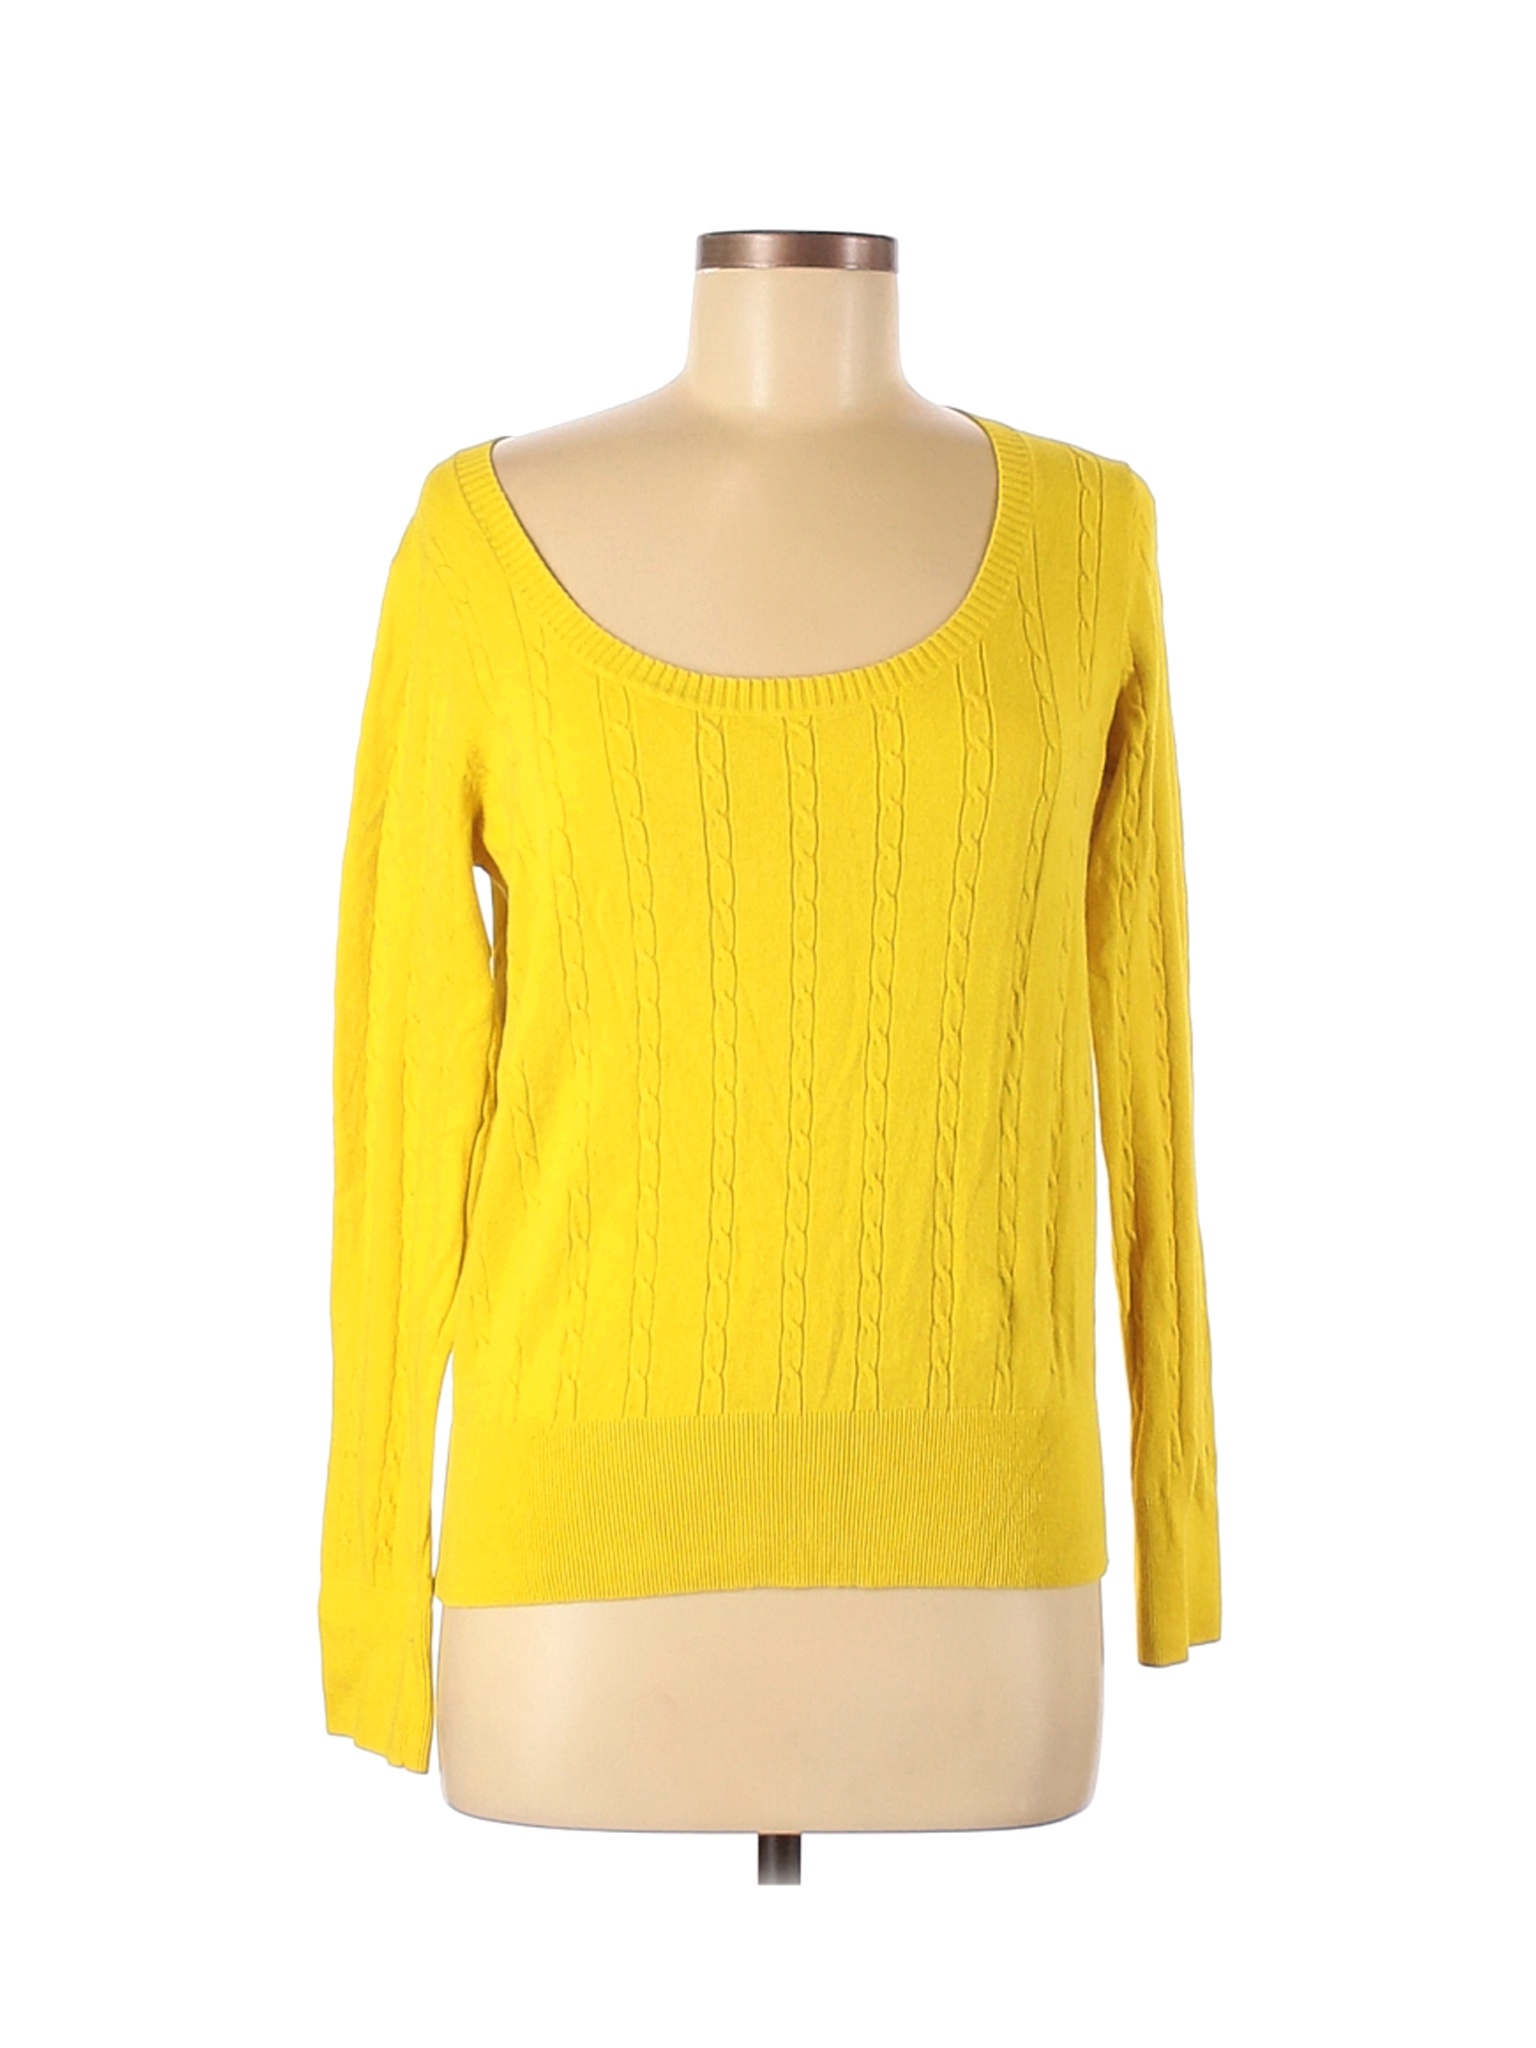 Old Navy Women Yellow Pullover Sweater M | eBay